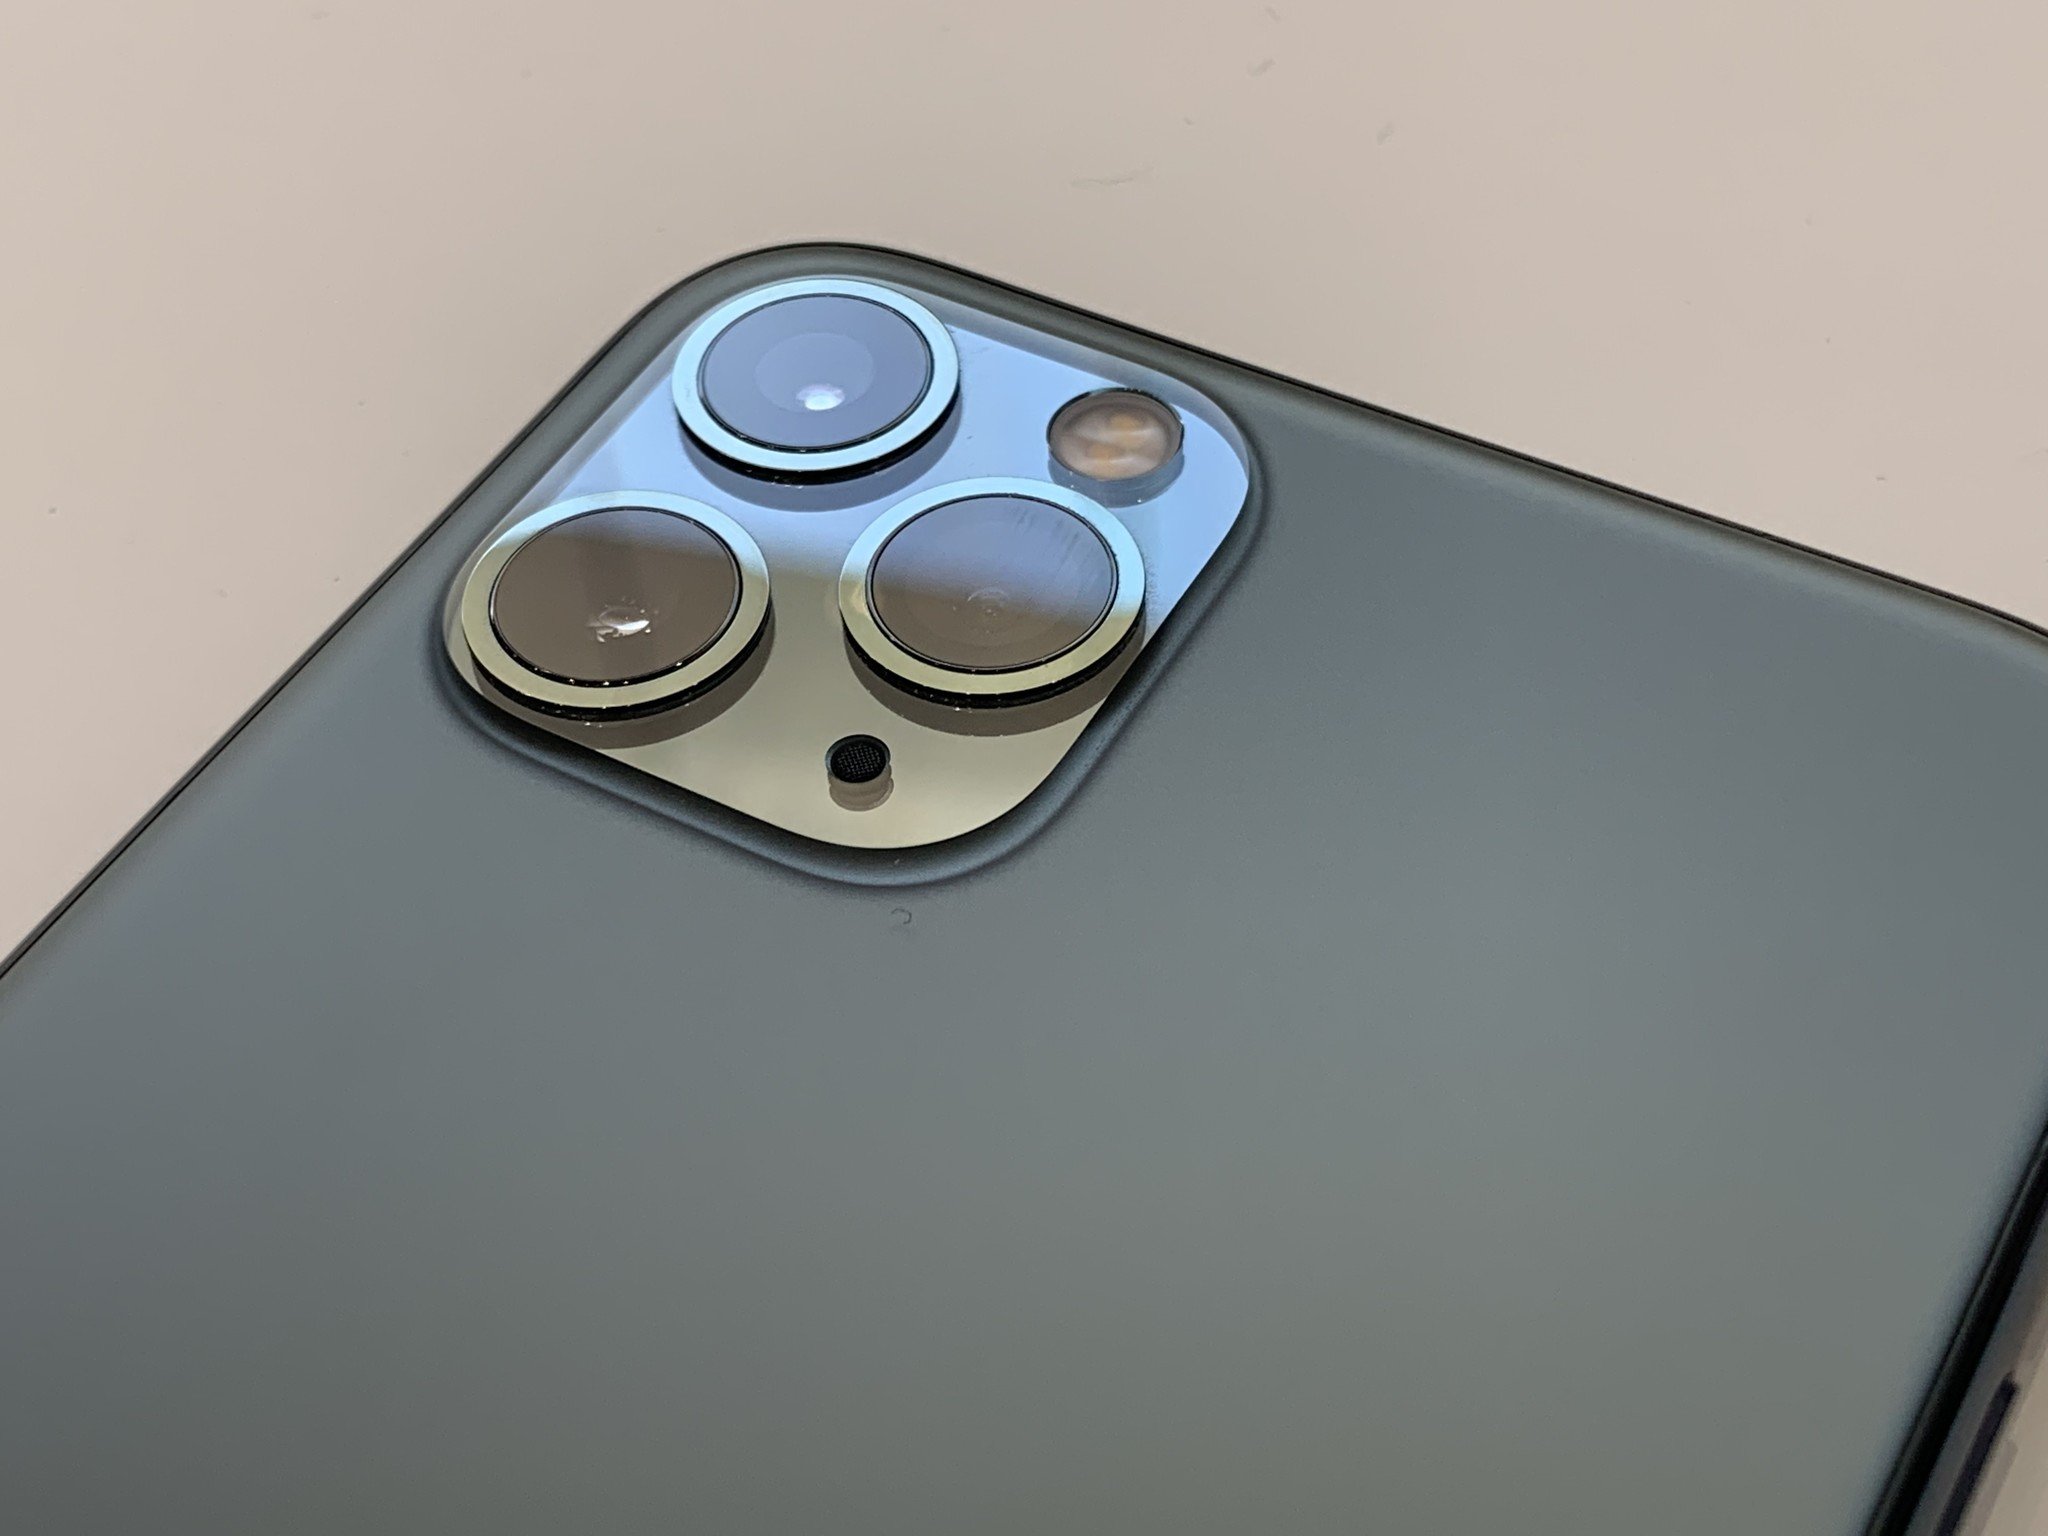 iPhone Camera